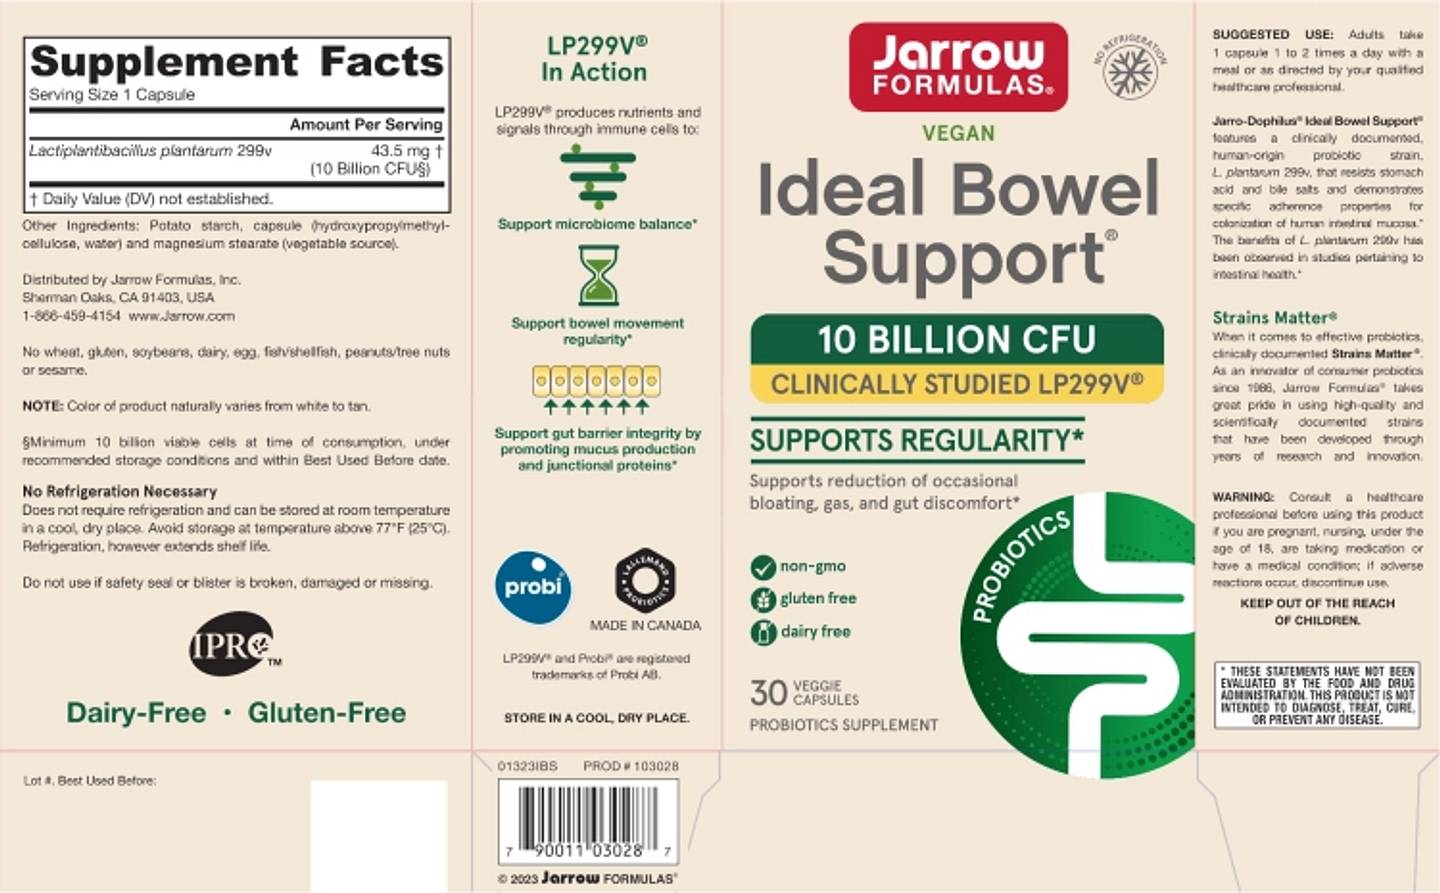 Jarrow Formulas, Vegan Ideal Bowel Support label